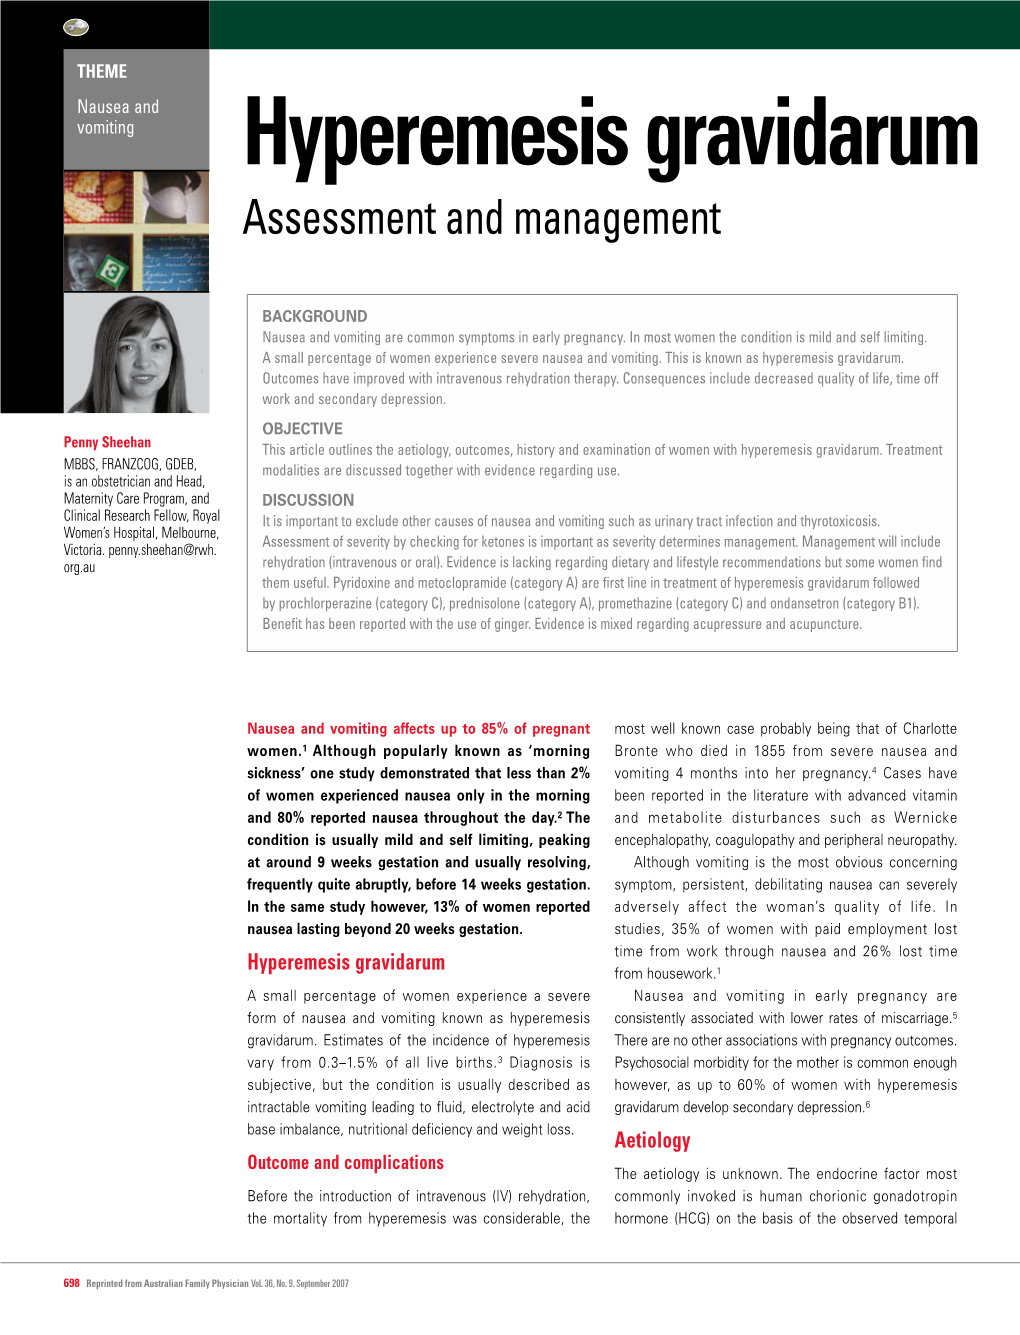 Hyperemesis Gravidarum – Assessment and Management